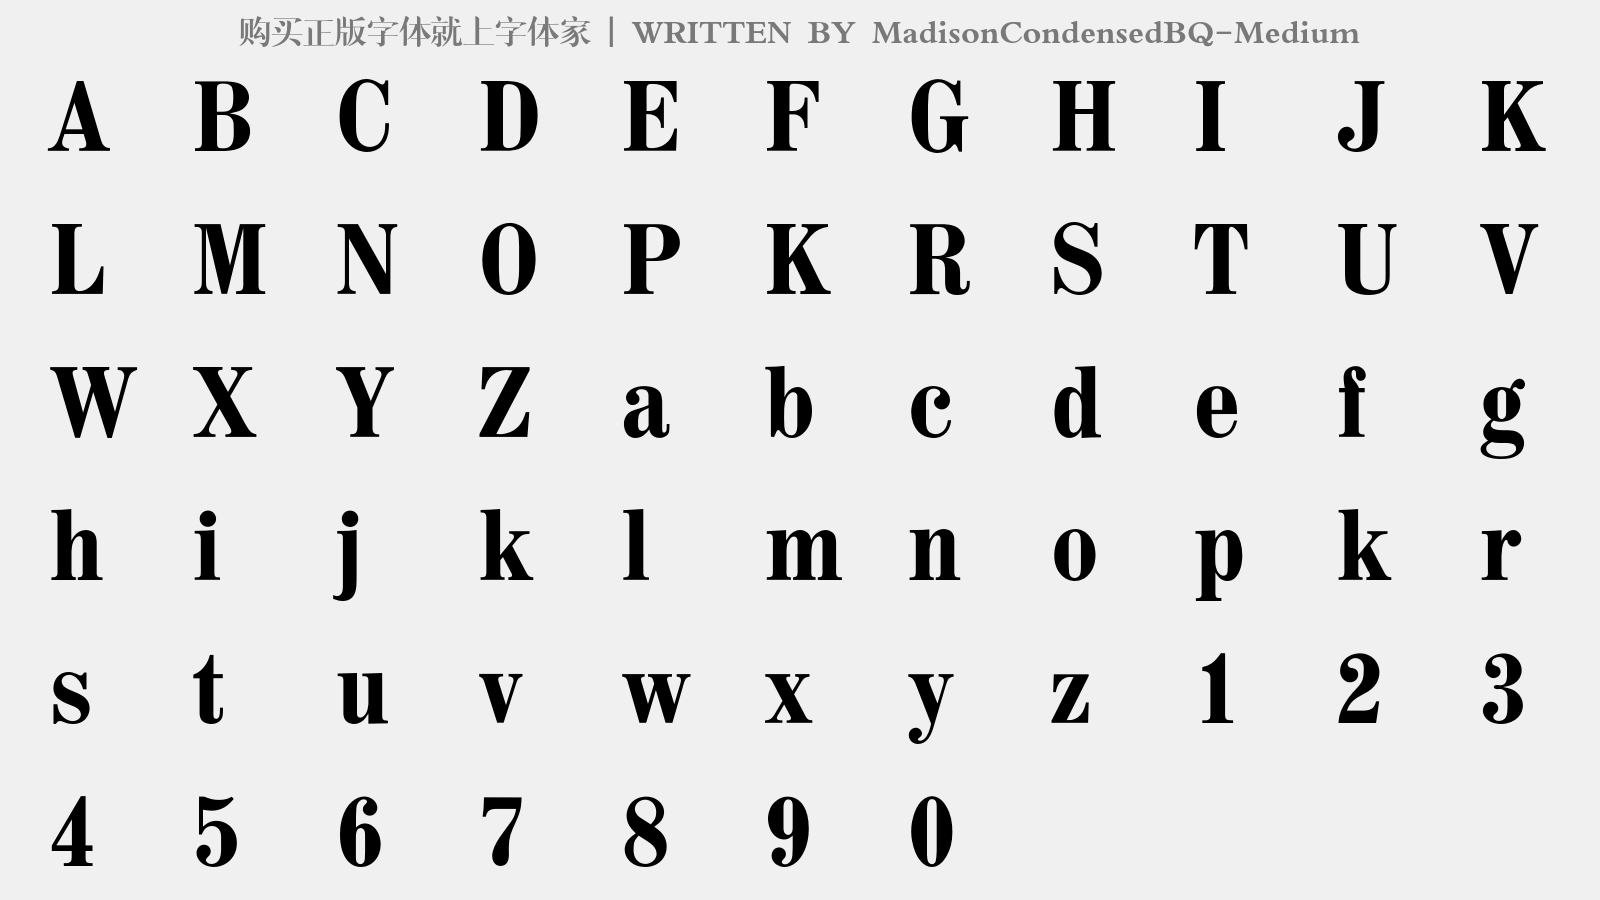 MadisonCondensedBQ-Medium - 大写字母/小写字母/数字